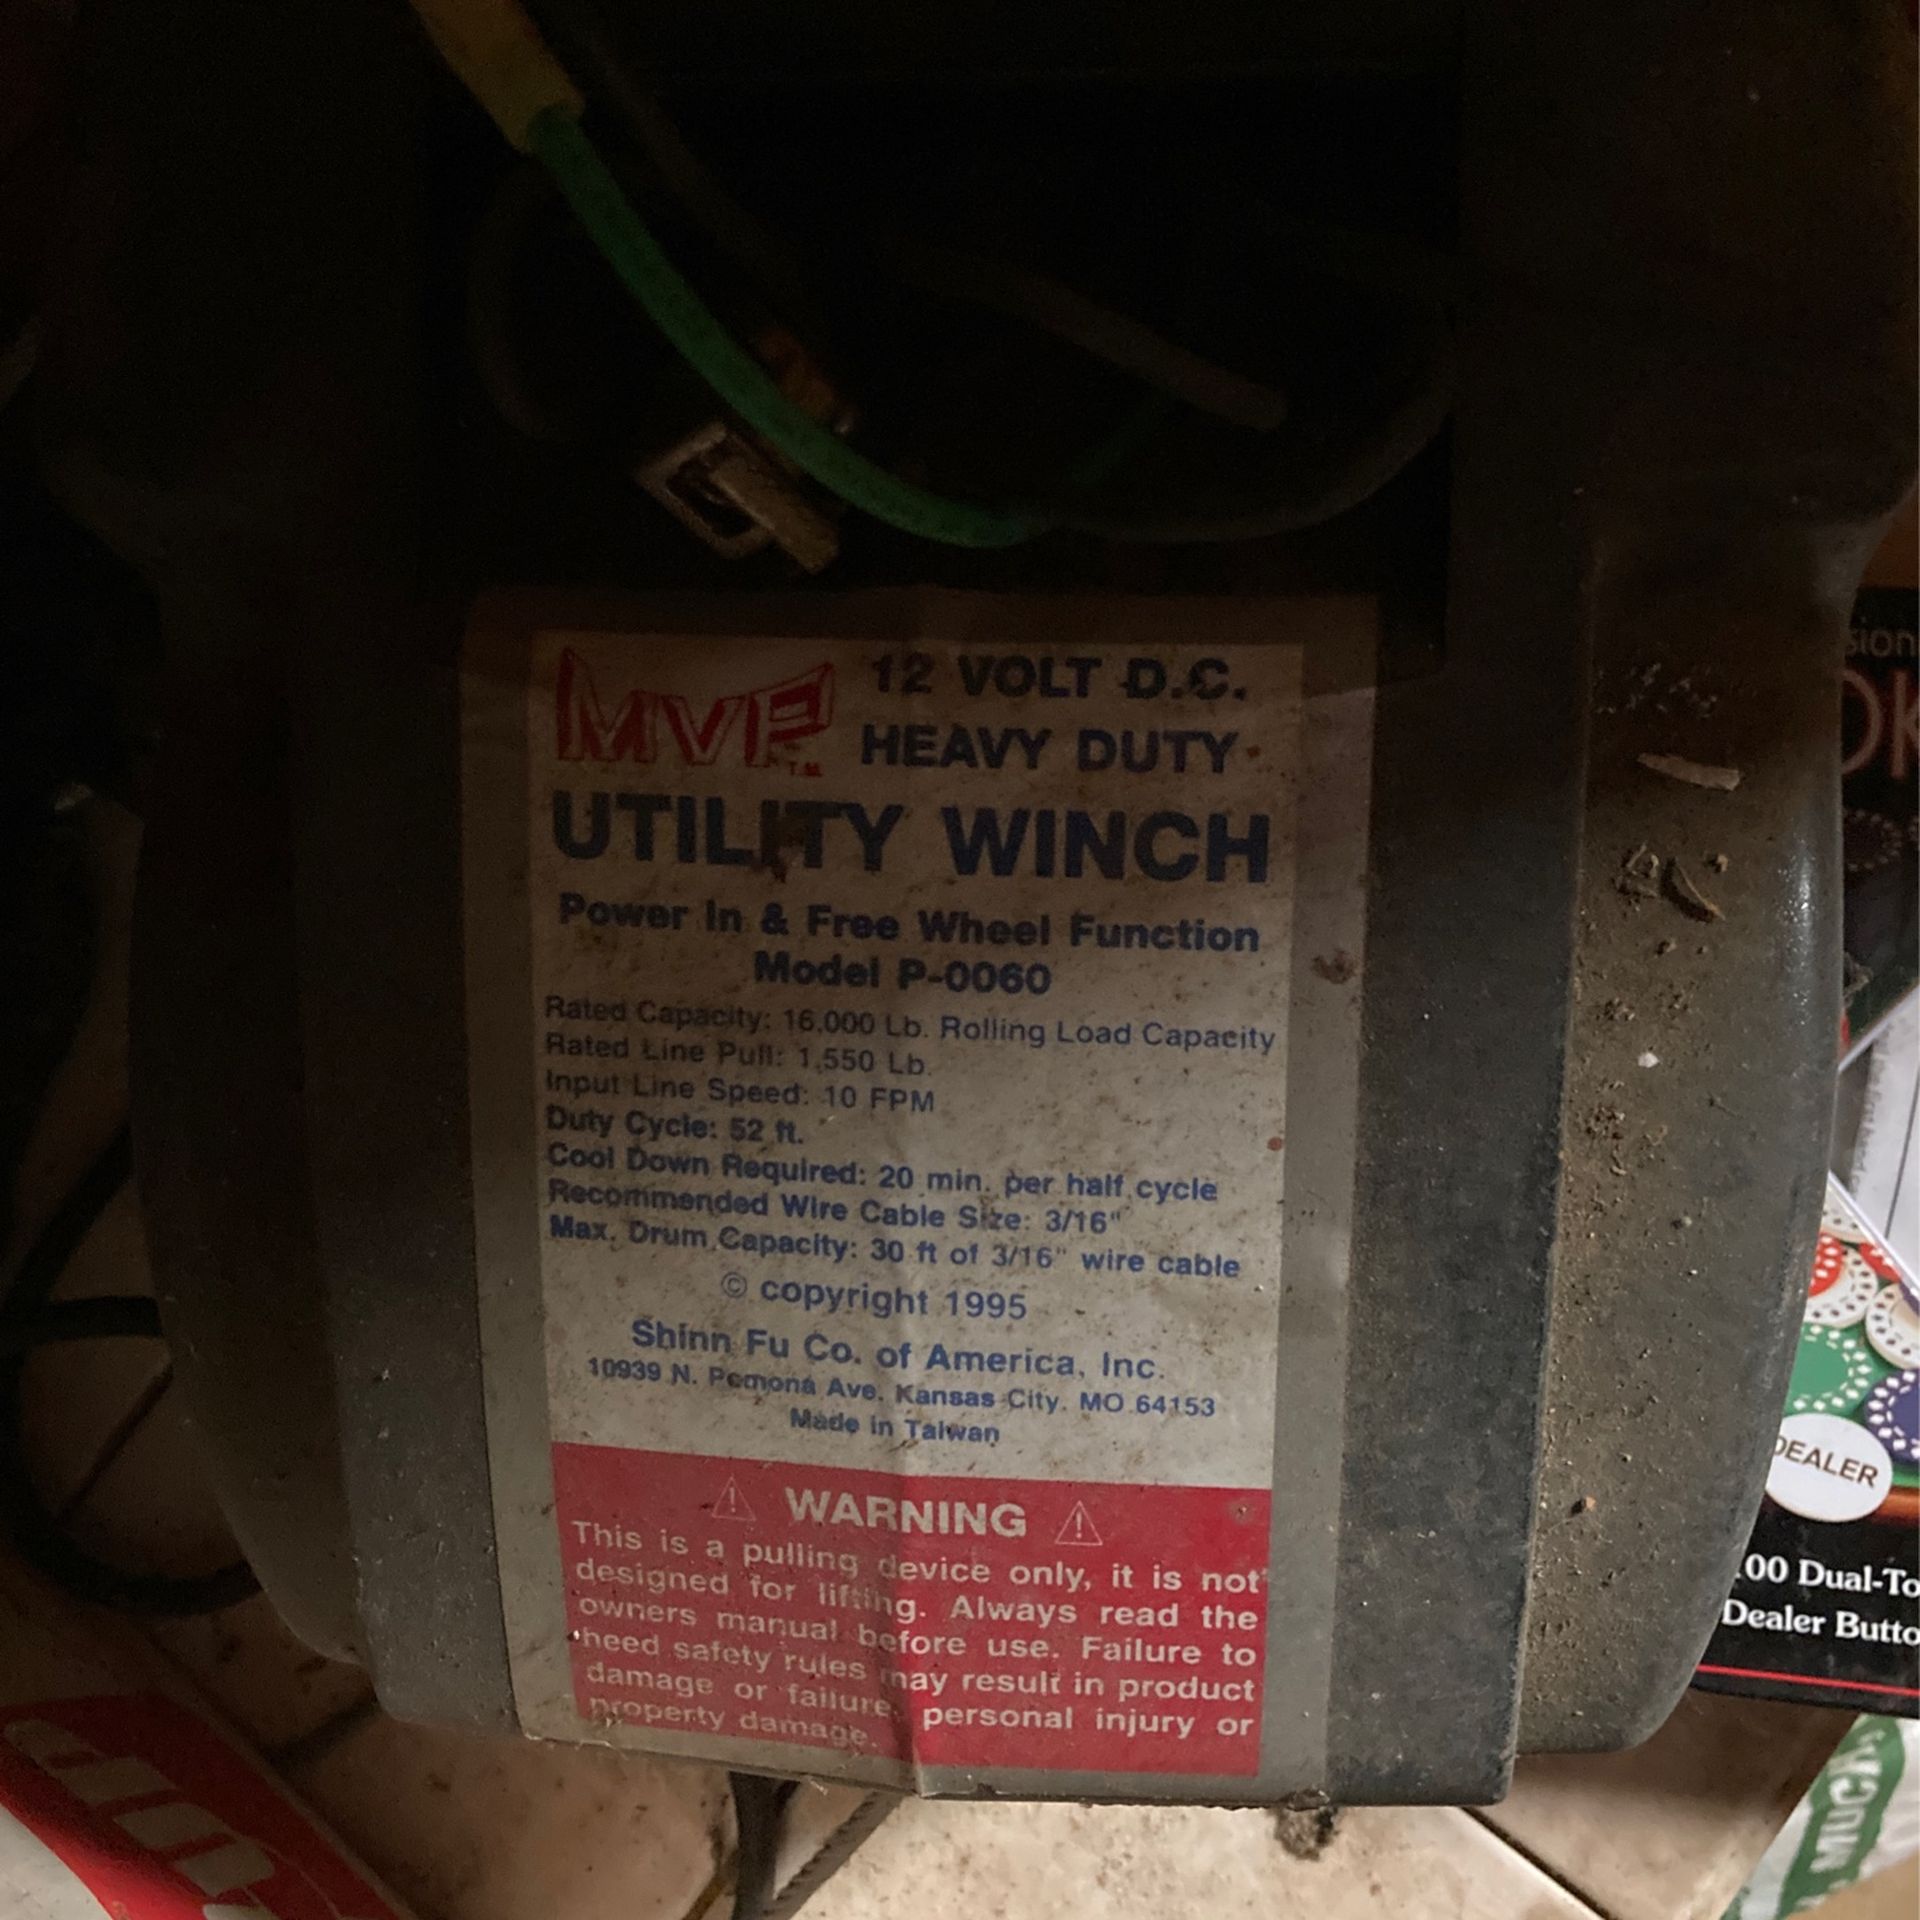 Utility Winch